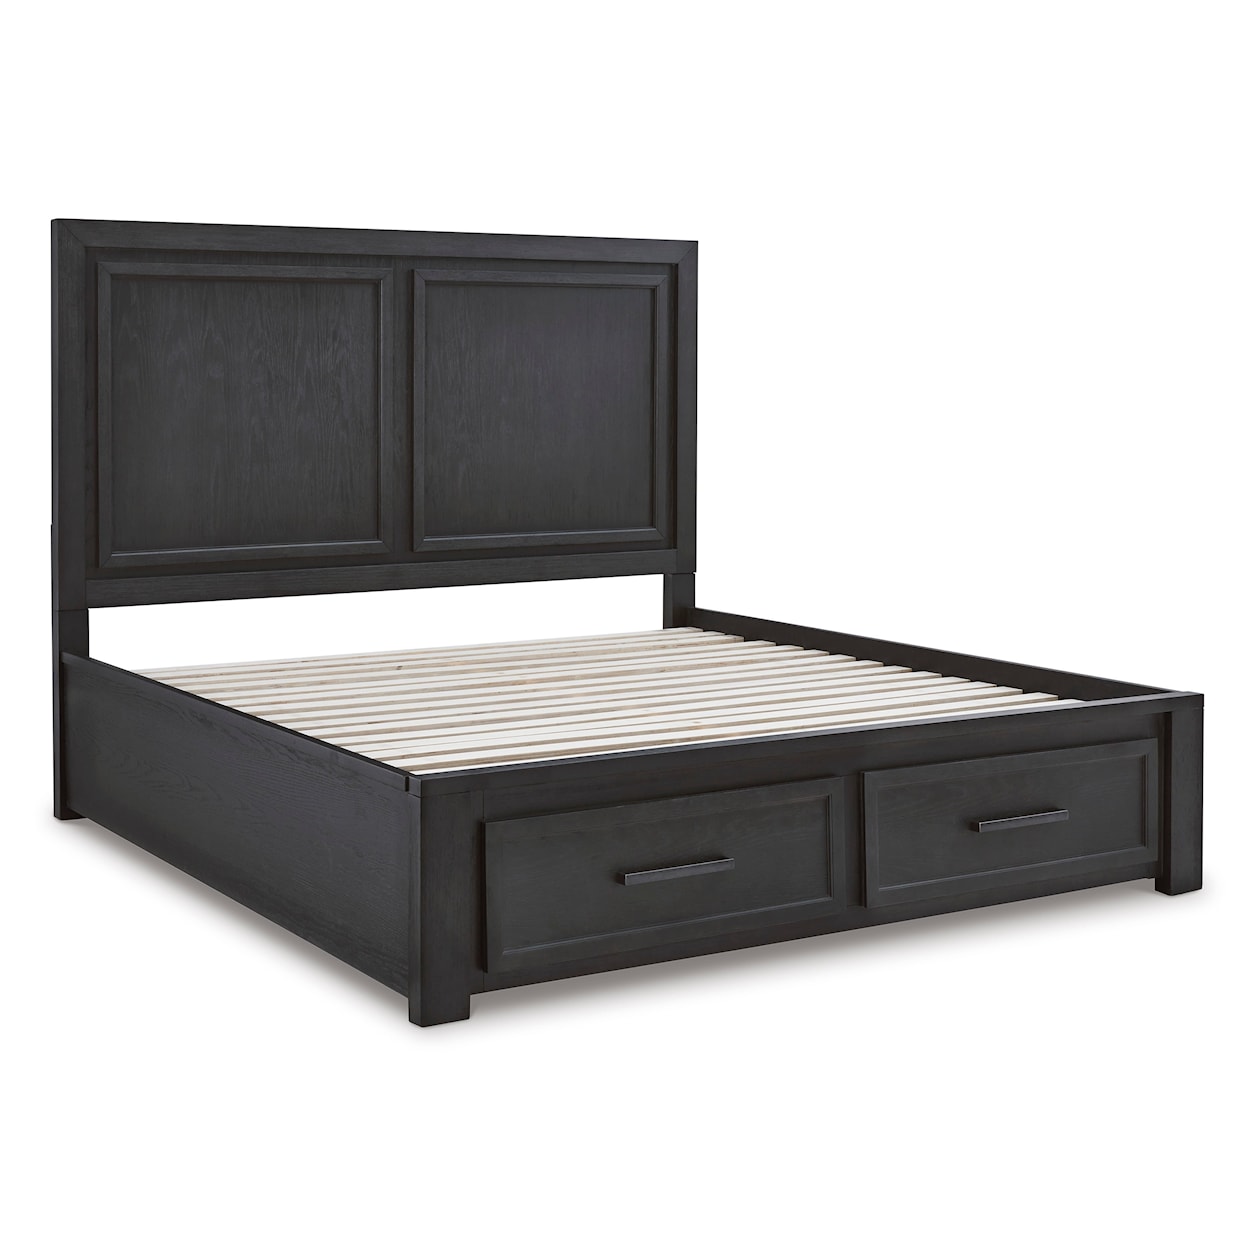 Ashley Furniture Signature Design Foyland California King Panel Storage Bed